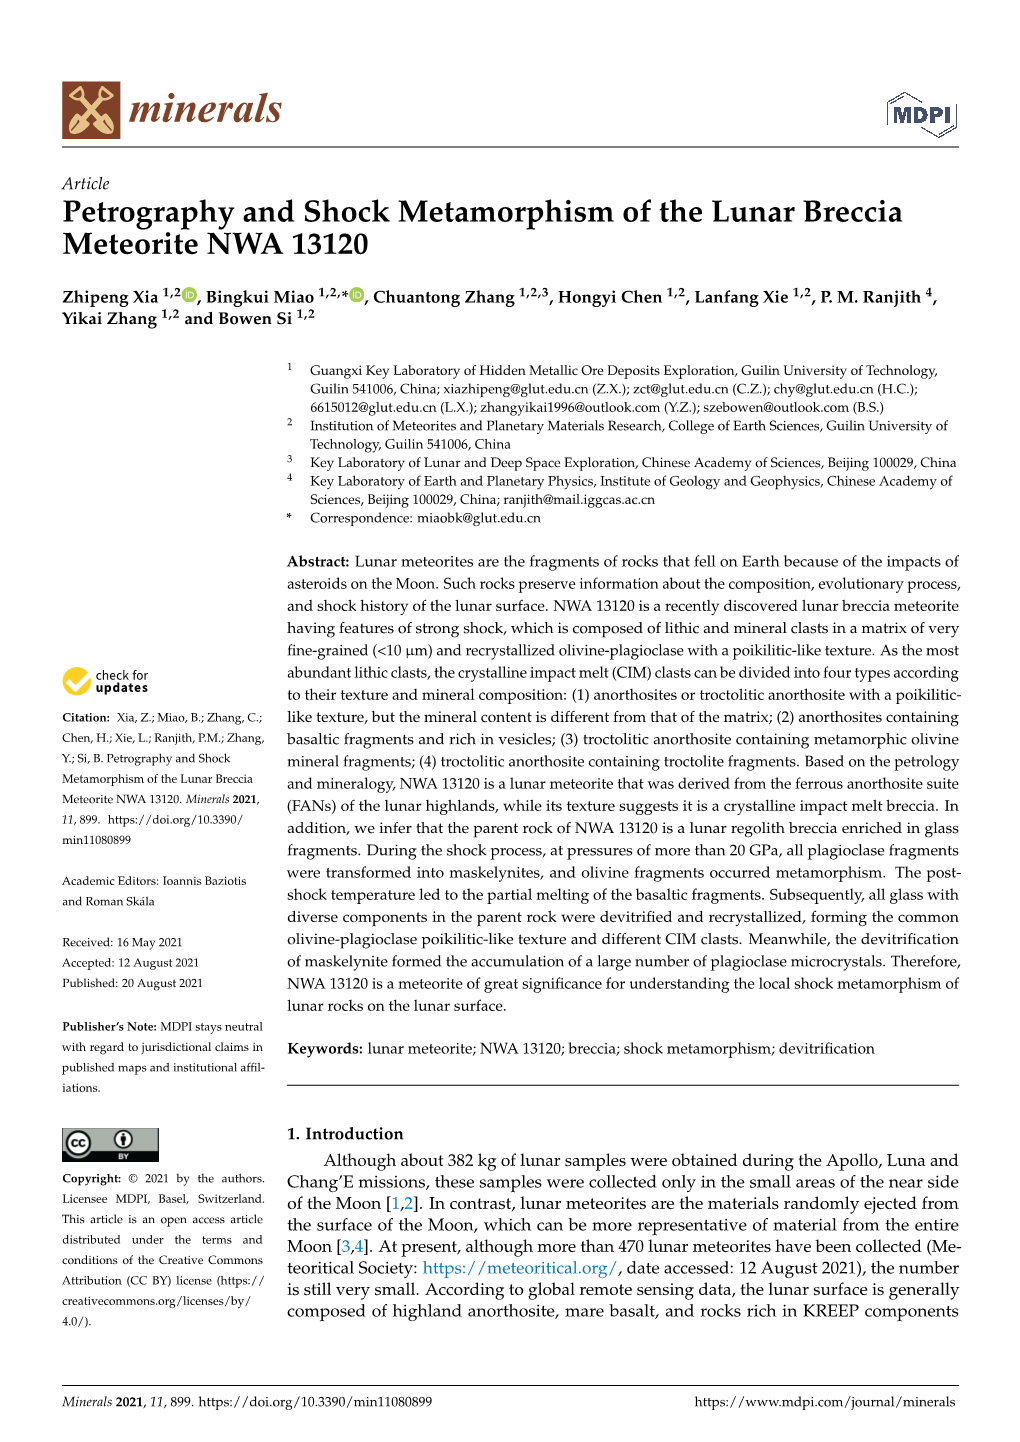 Petrography and Shock Metamorphism of the Lunar Breccia Meteorite NWA 13120